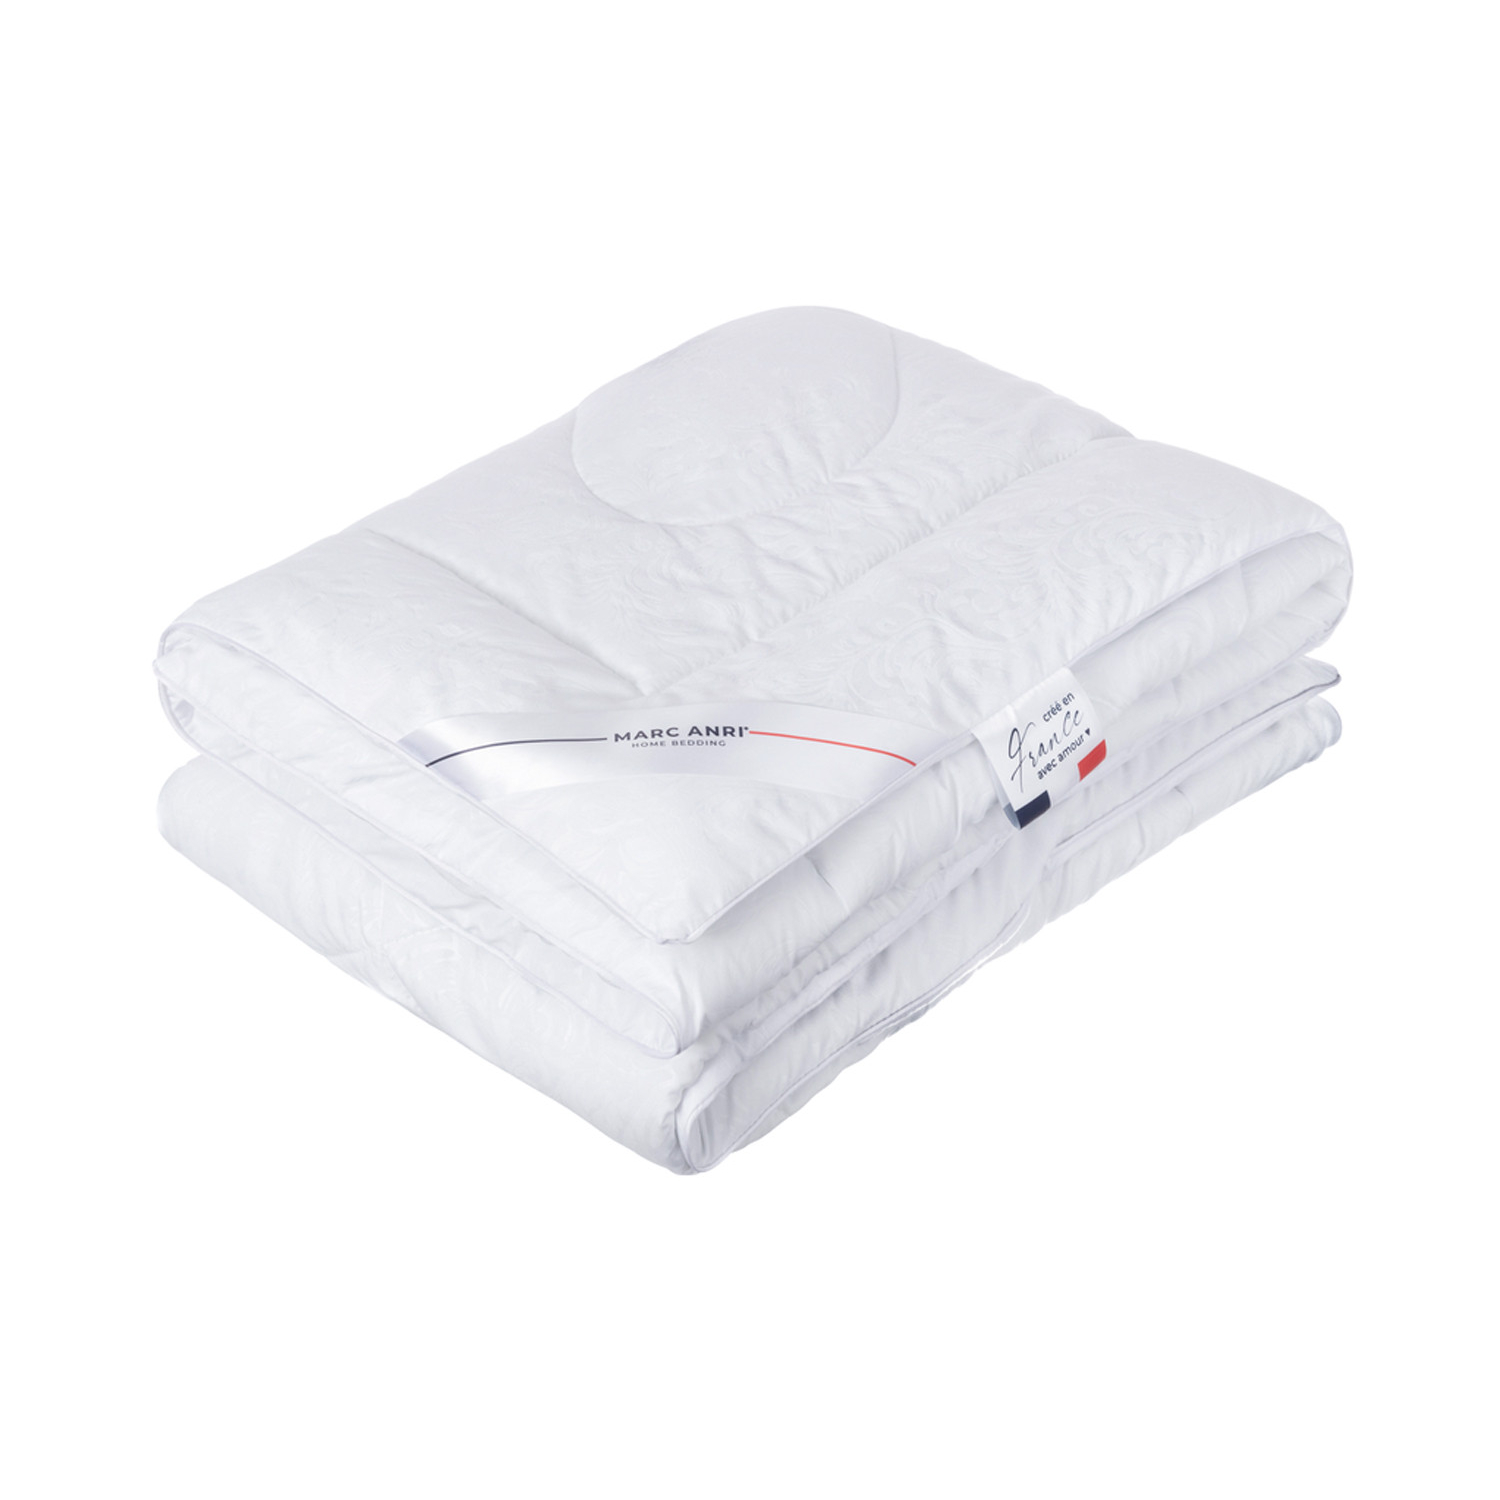 Одеяло Marc Anri Chinon белое 200х220 см (MA-MF)